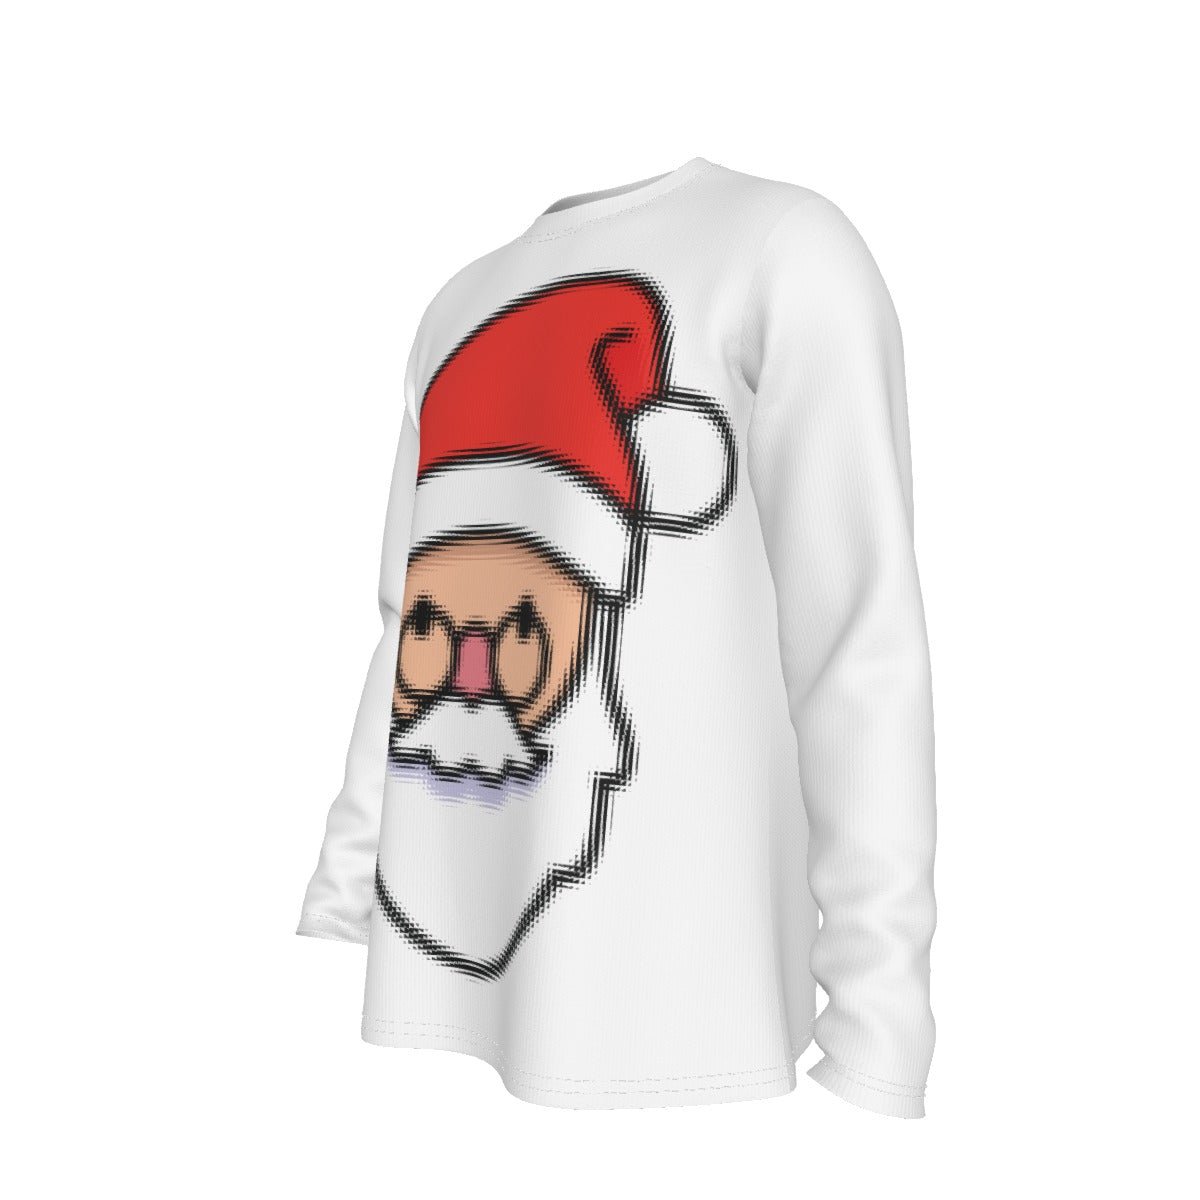 Men's Long Sleeve Christmas T-Shirt - Blurred Santa - Festive Style